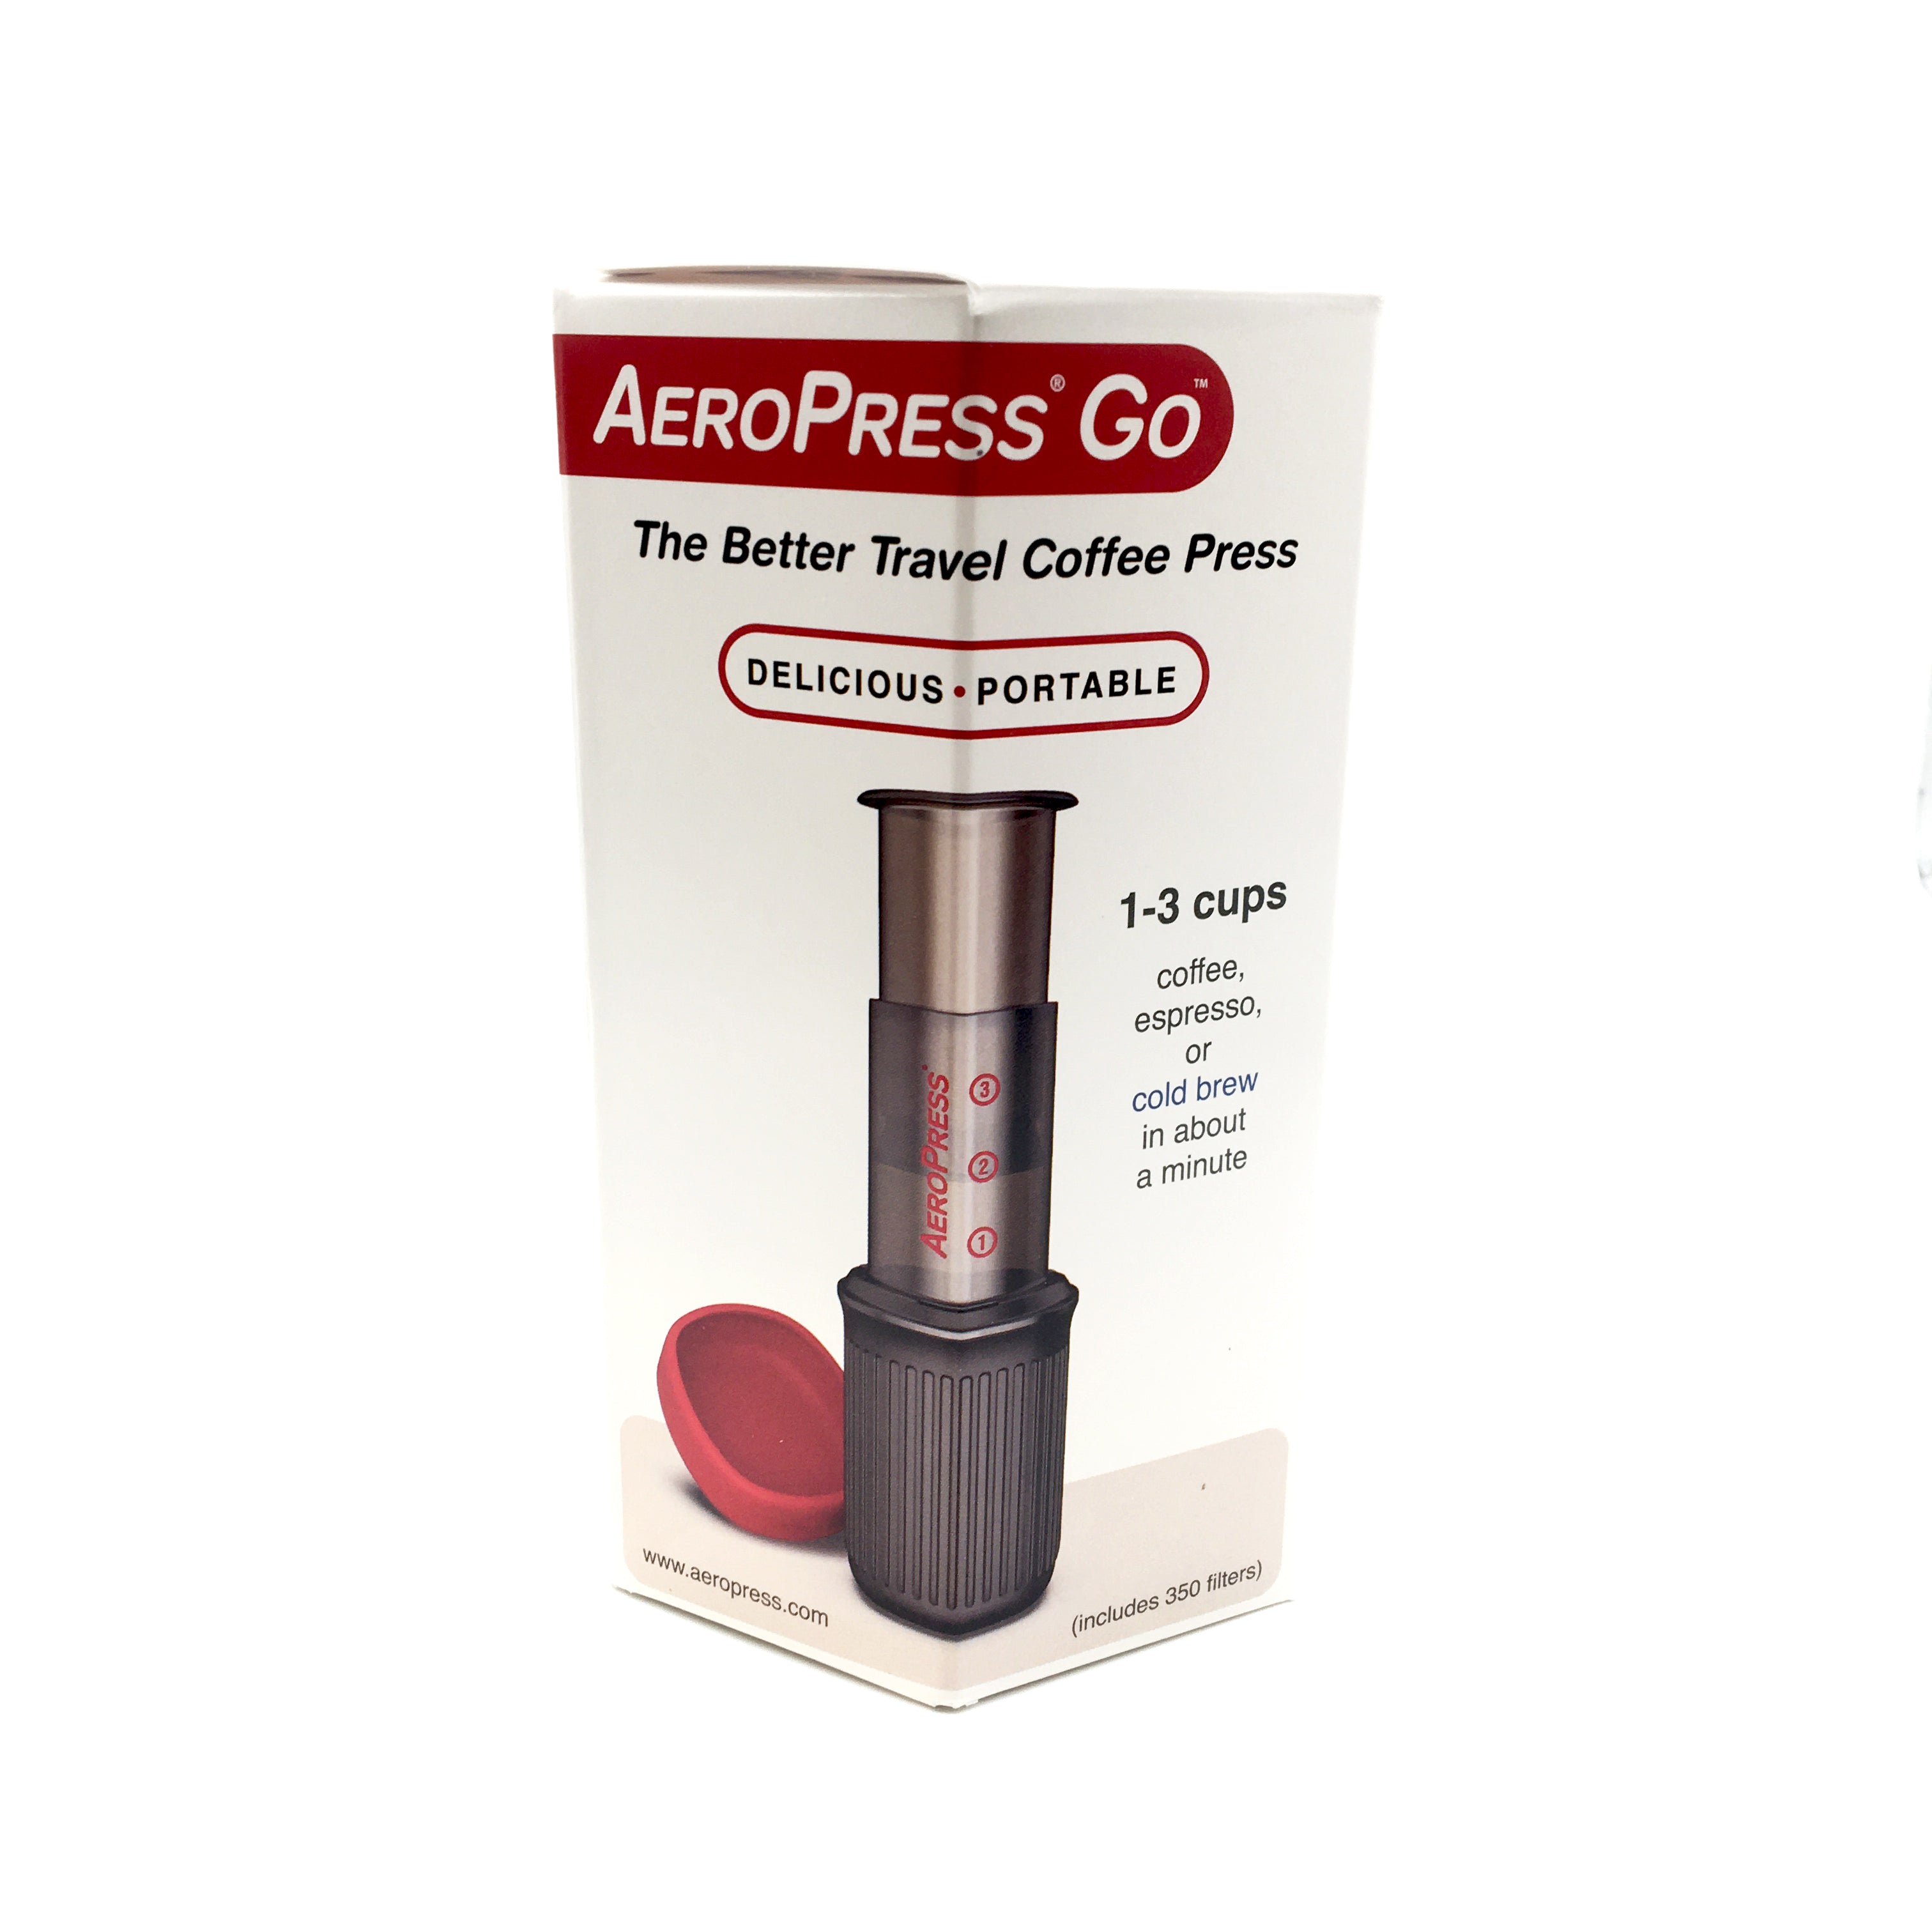 Aeropress Go Travel Coffee Maker